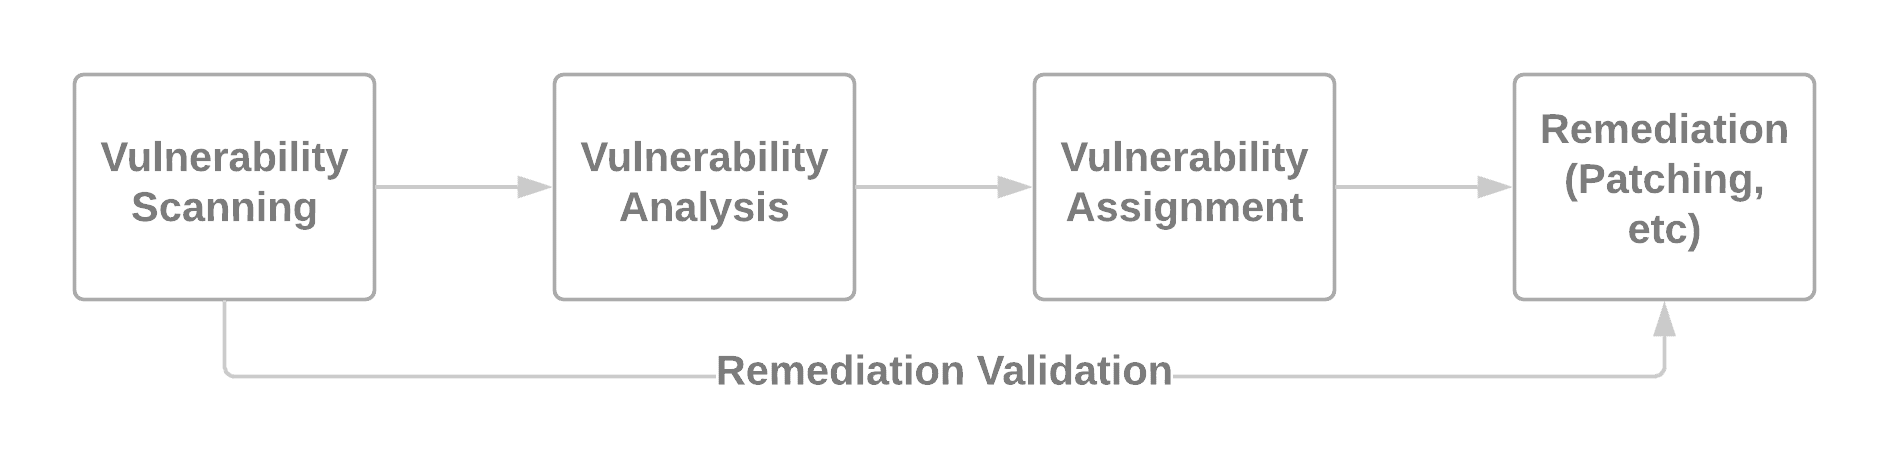 Simplified Vulnerability Management Process